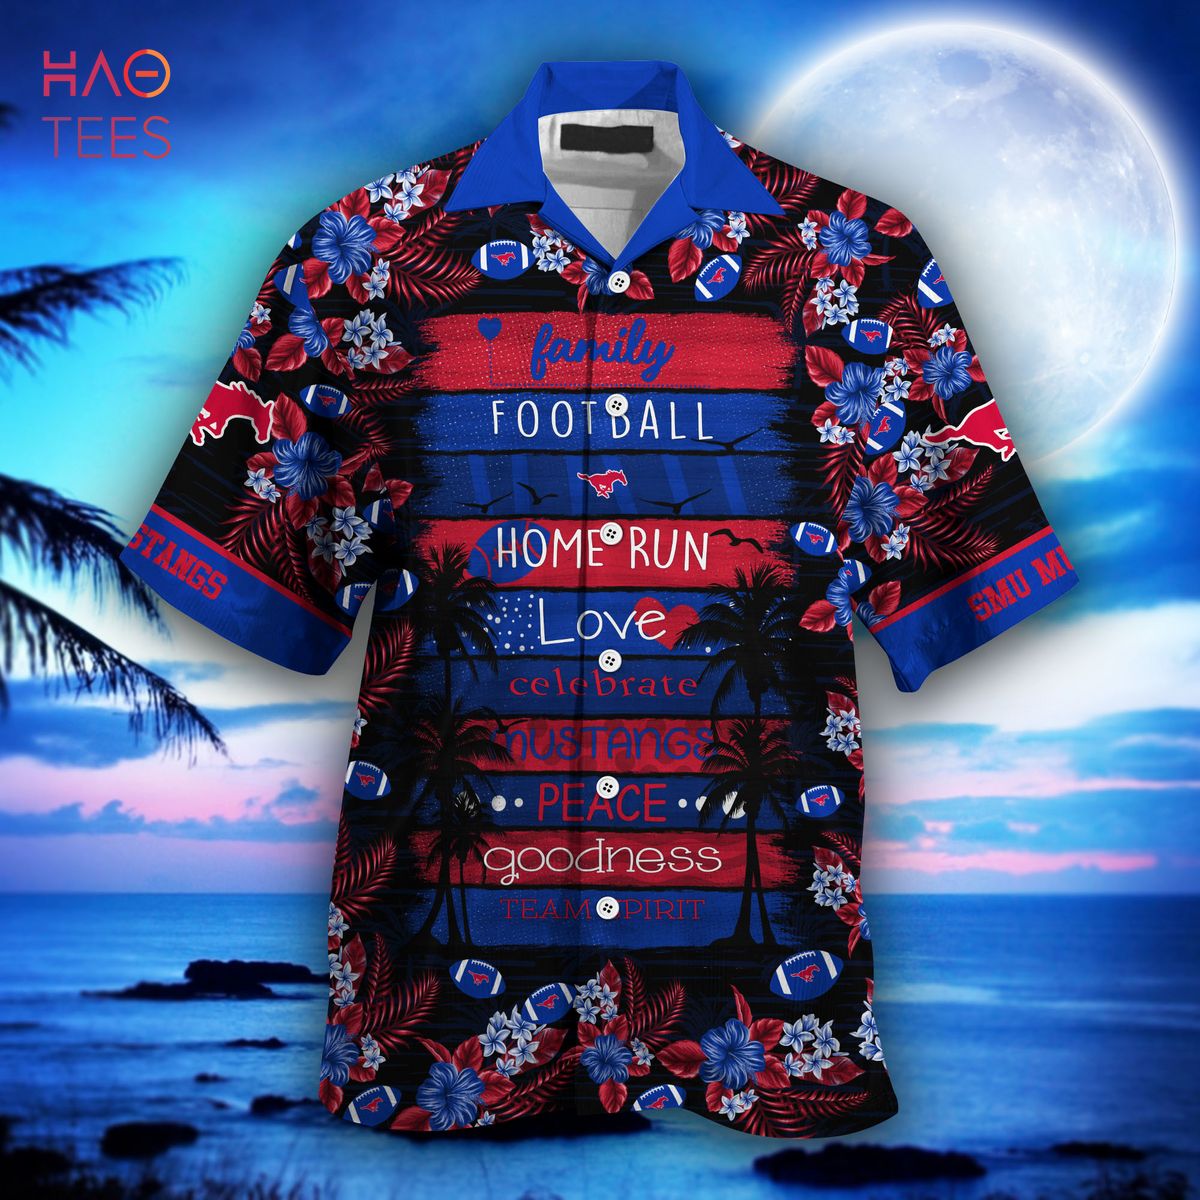 [LIMITED] SMU Mustangs Hawaiian Shirt, New Gift For Summer